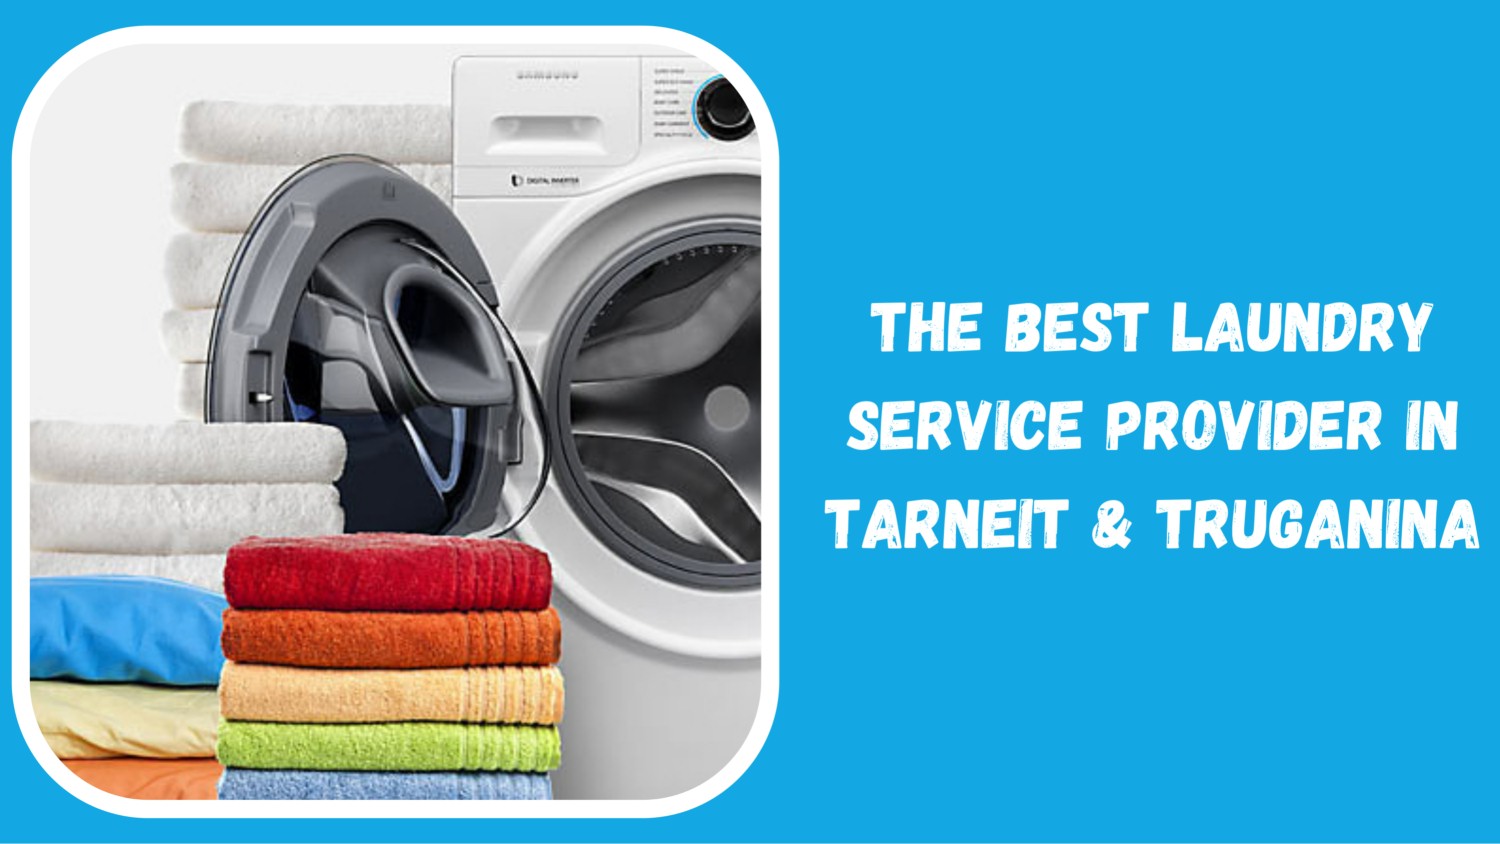 The Best Laundry Service Provider in Tarneit & Truganina 